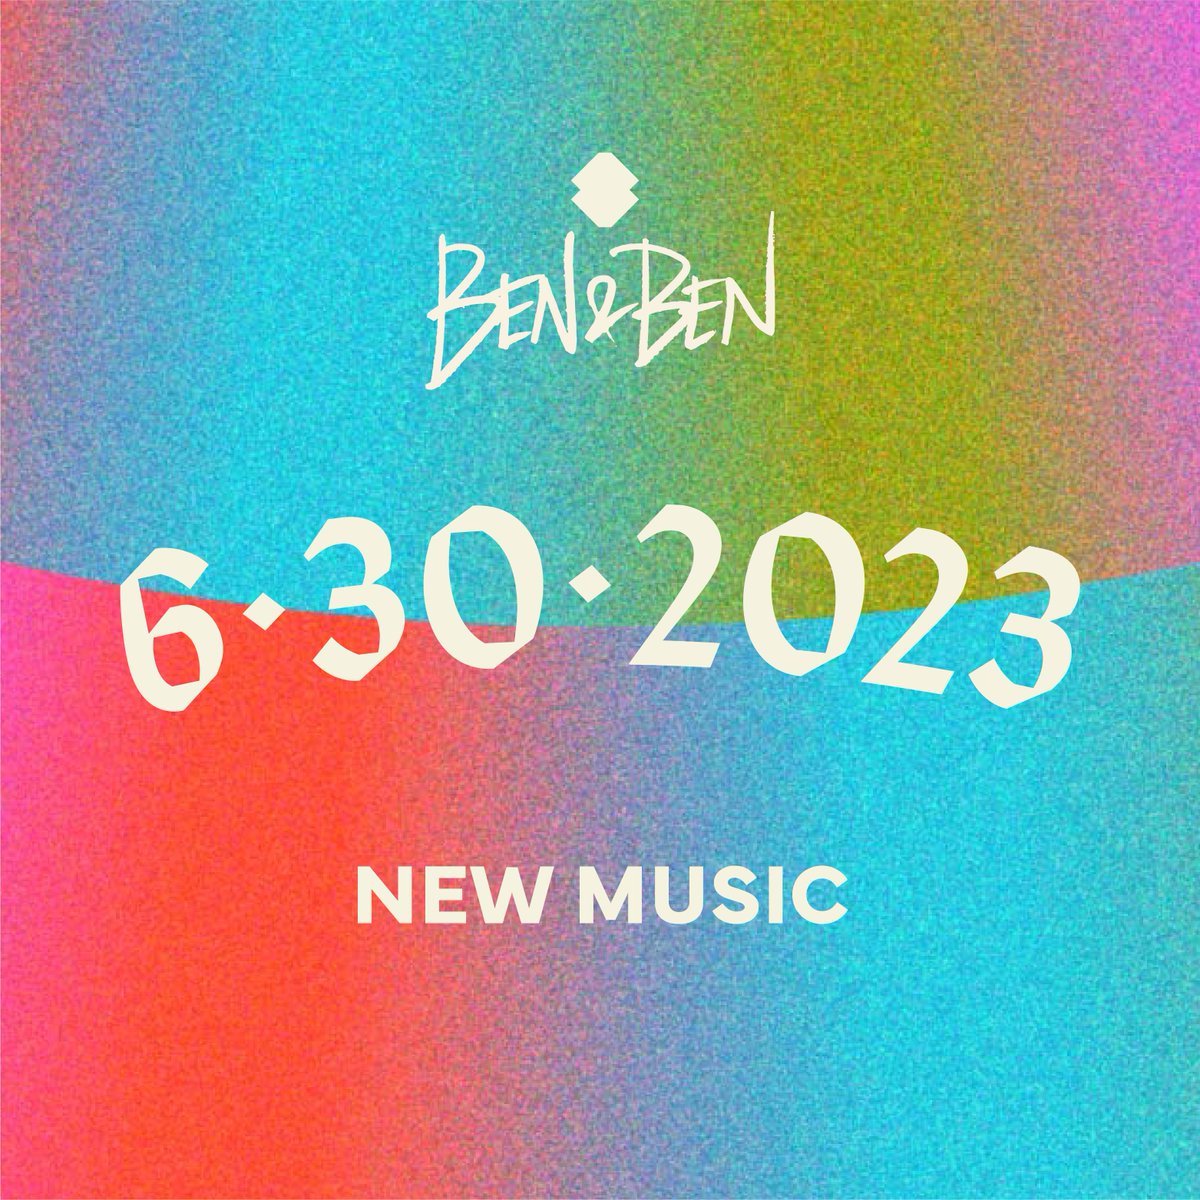 JUNE 30 2023
#BenAndBenNewMusic